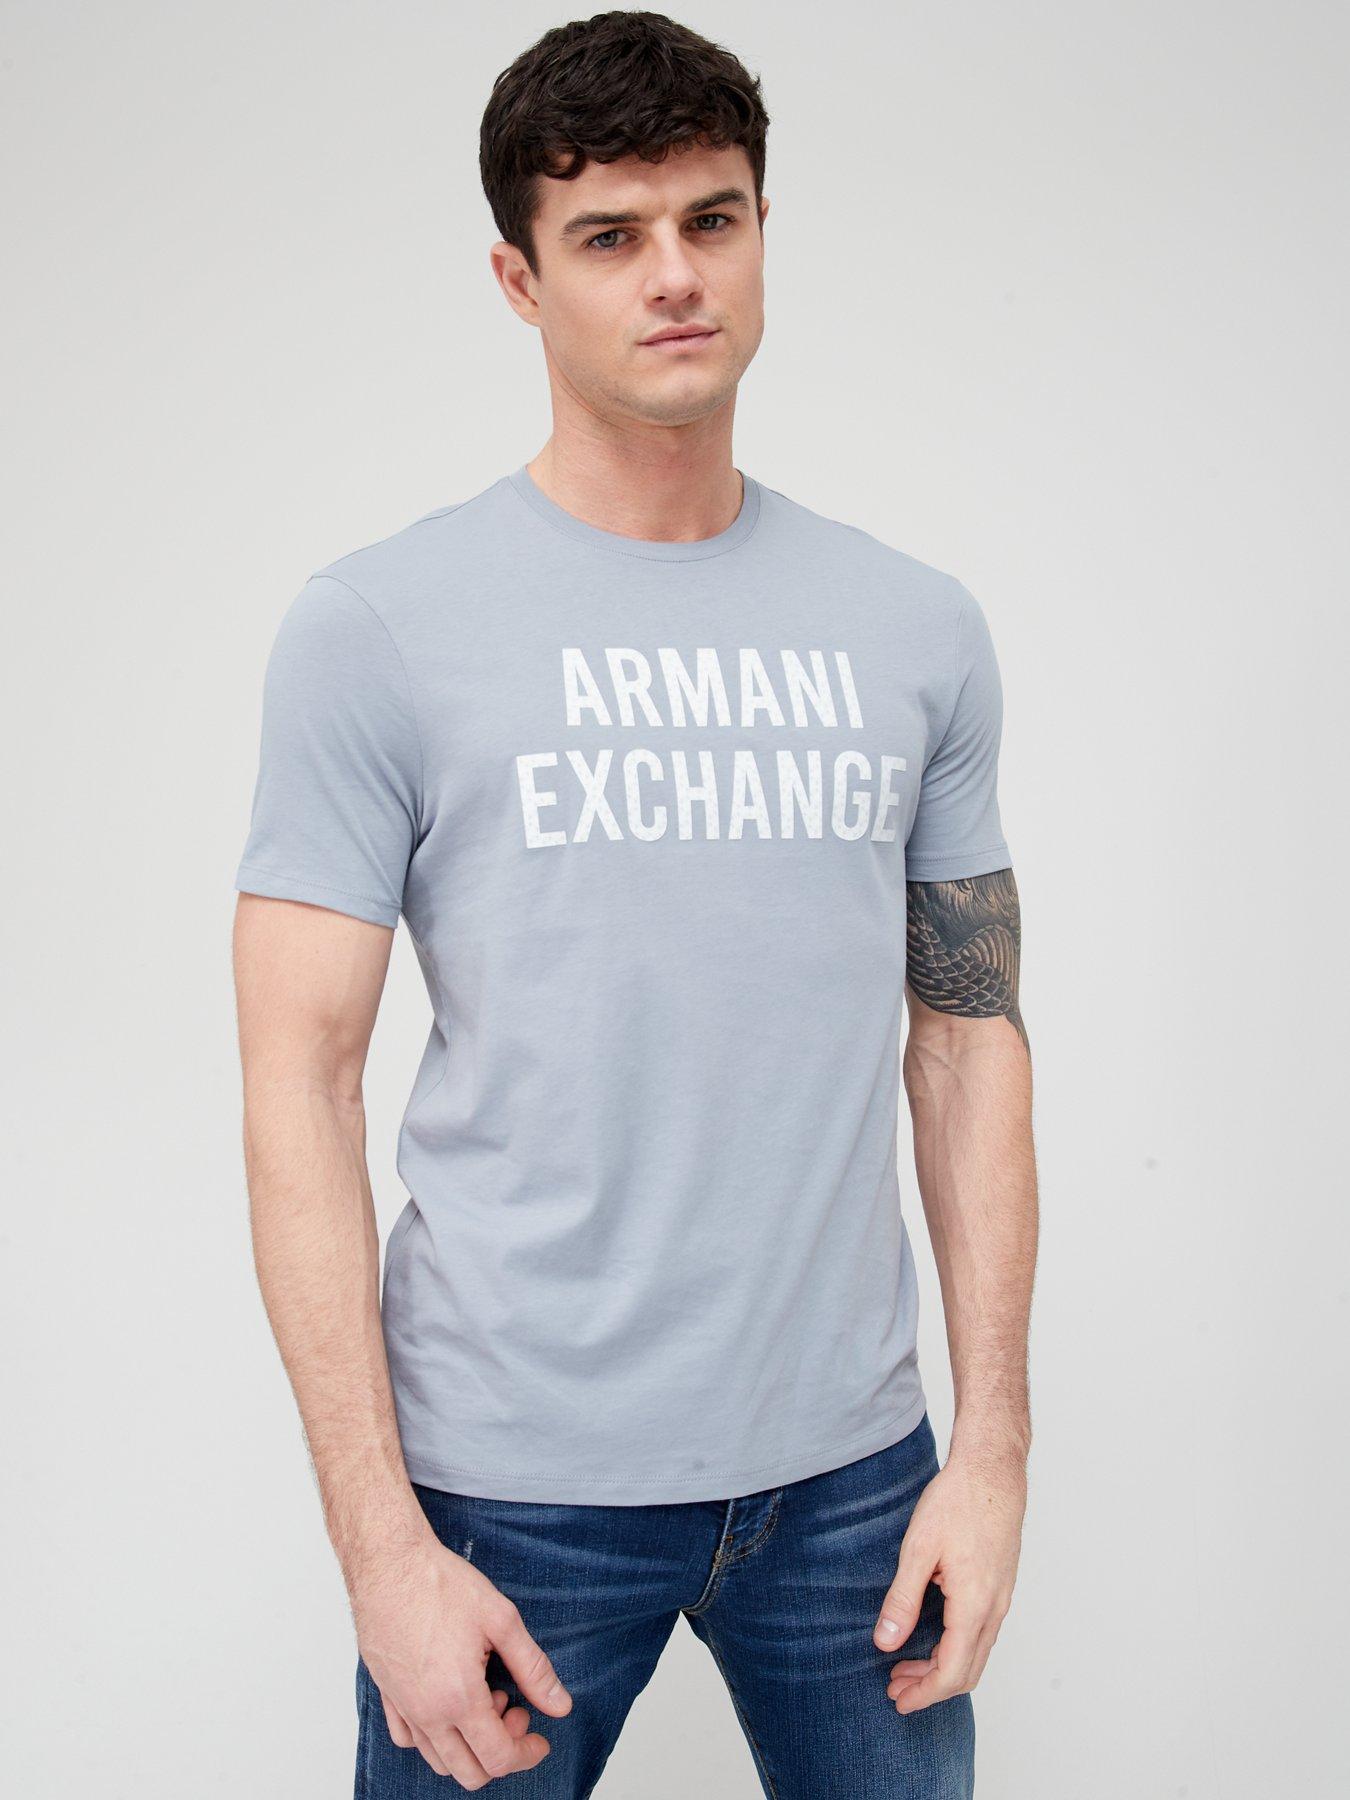 Armani Exchange Font Logo T-shirt - Light Blue 